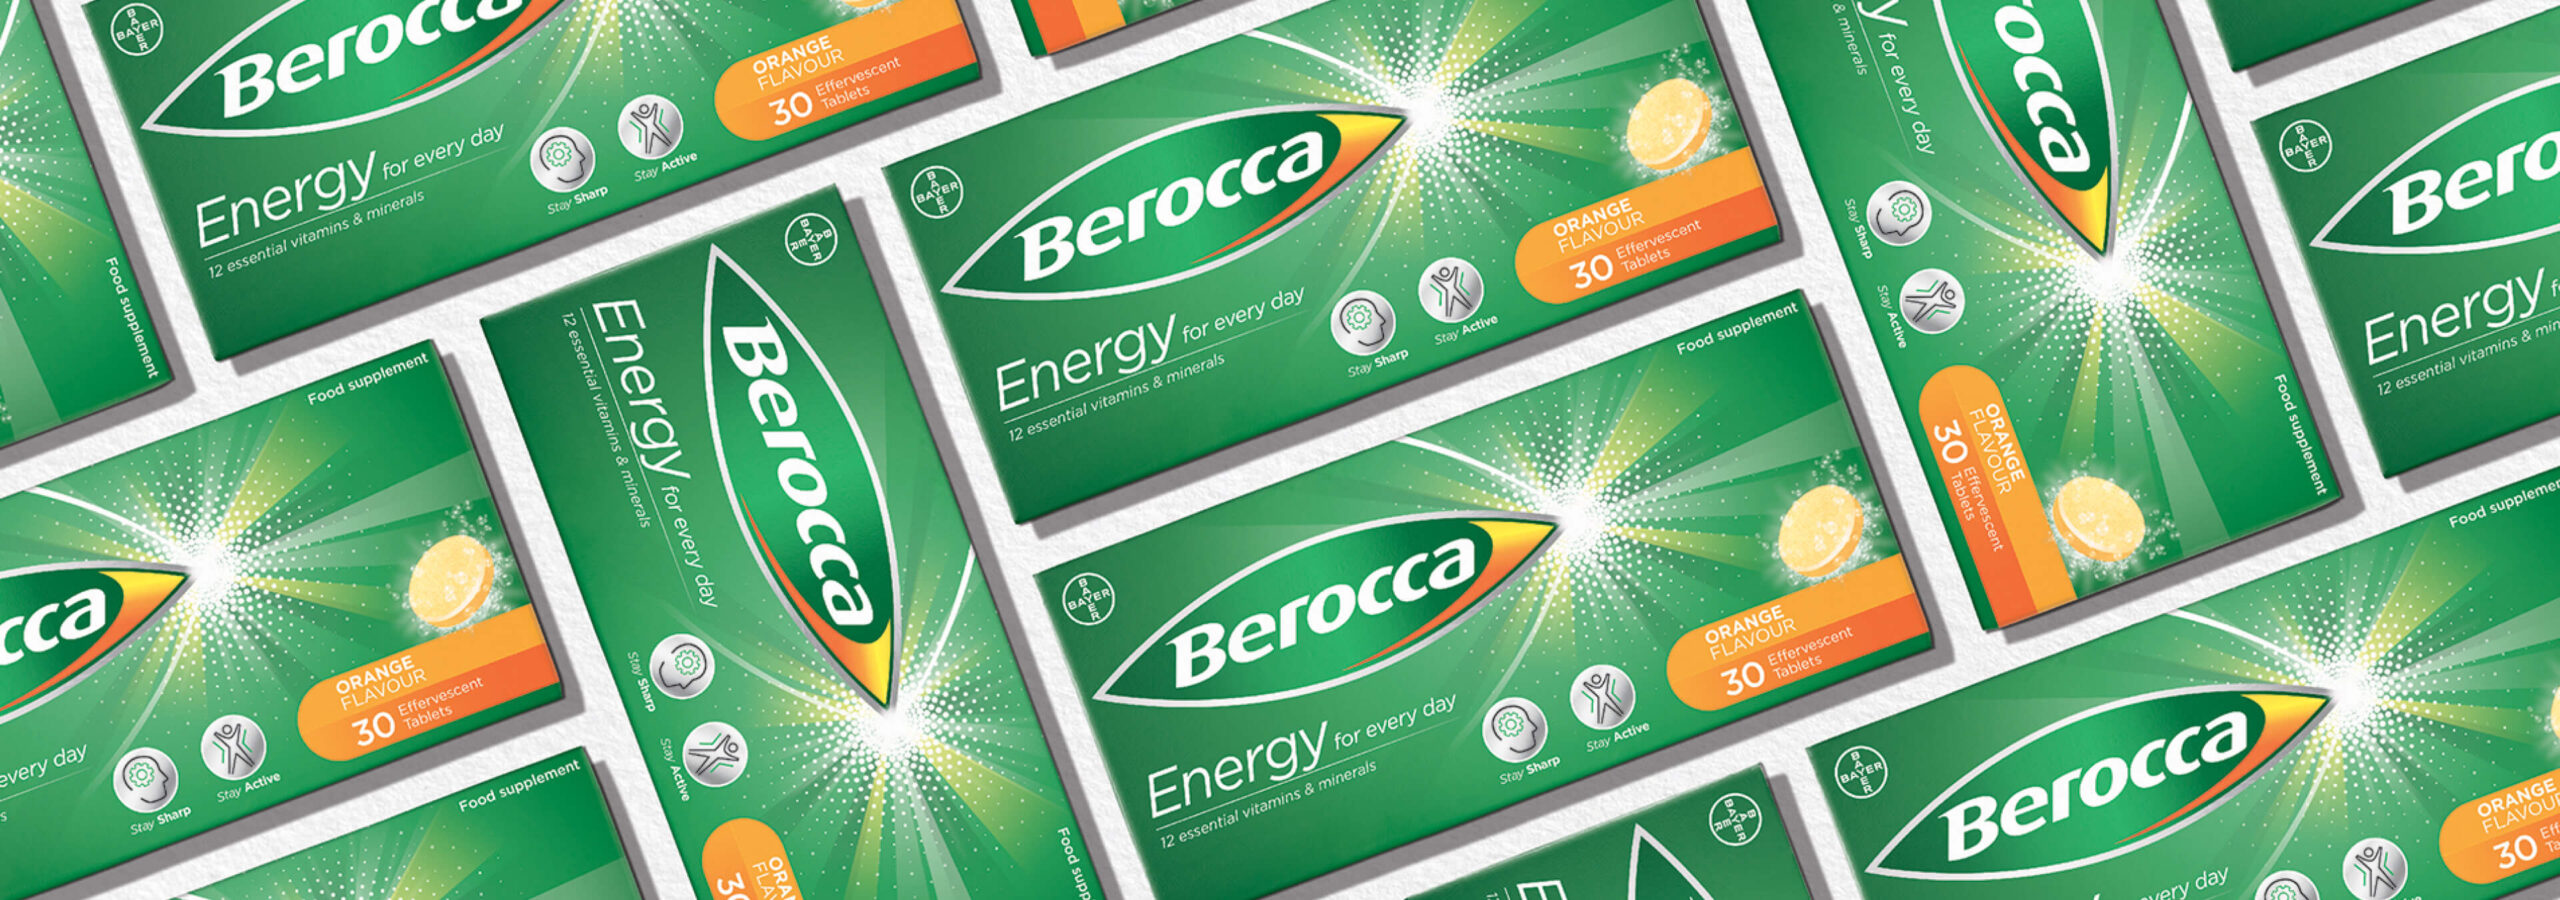 Berocca brand design packaging